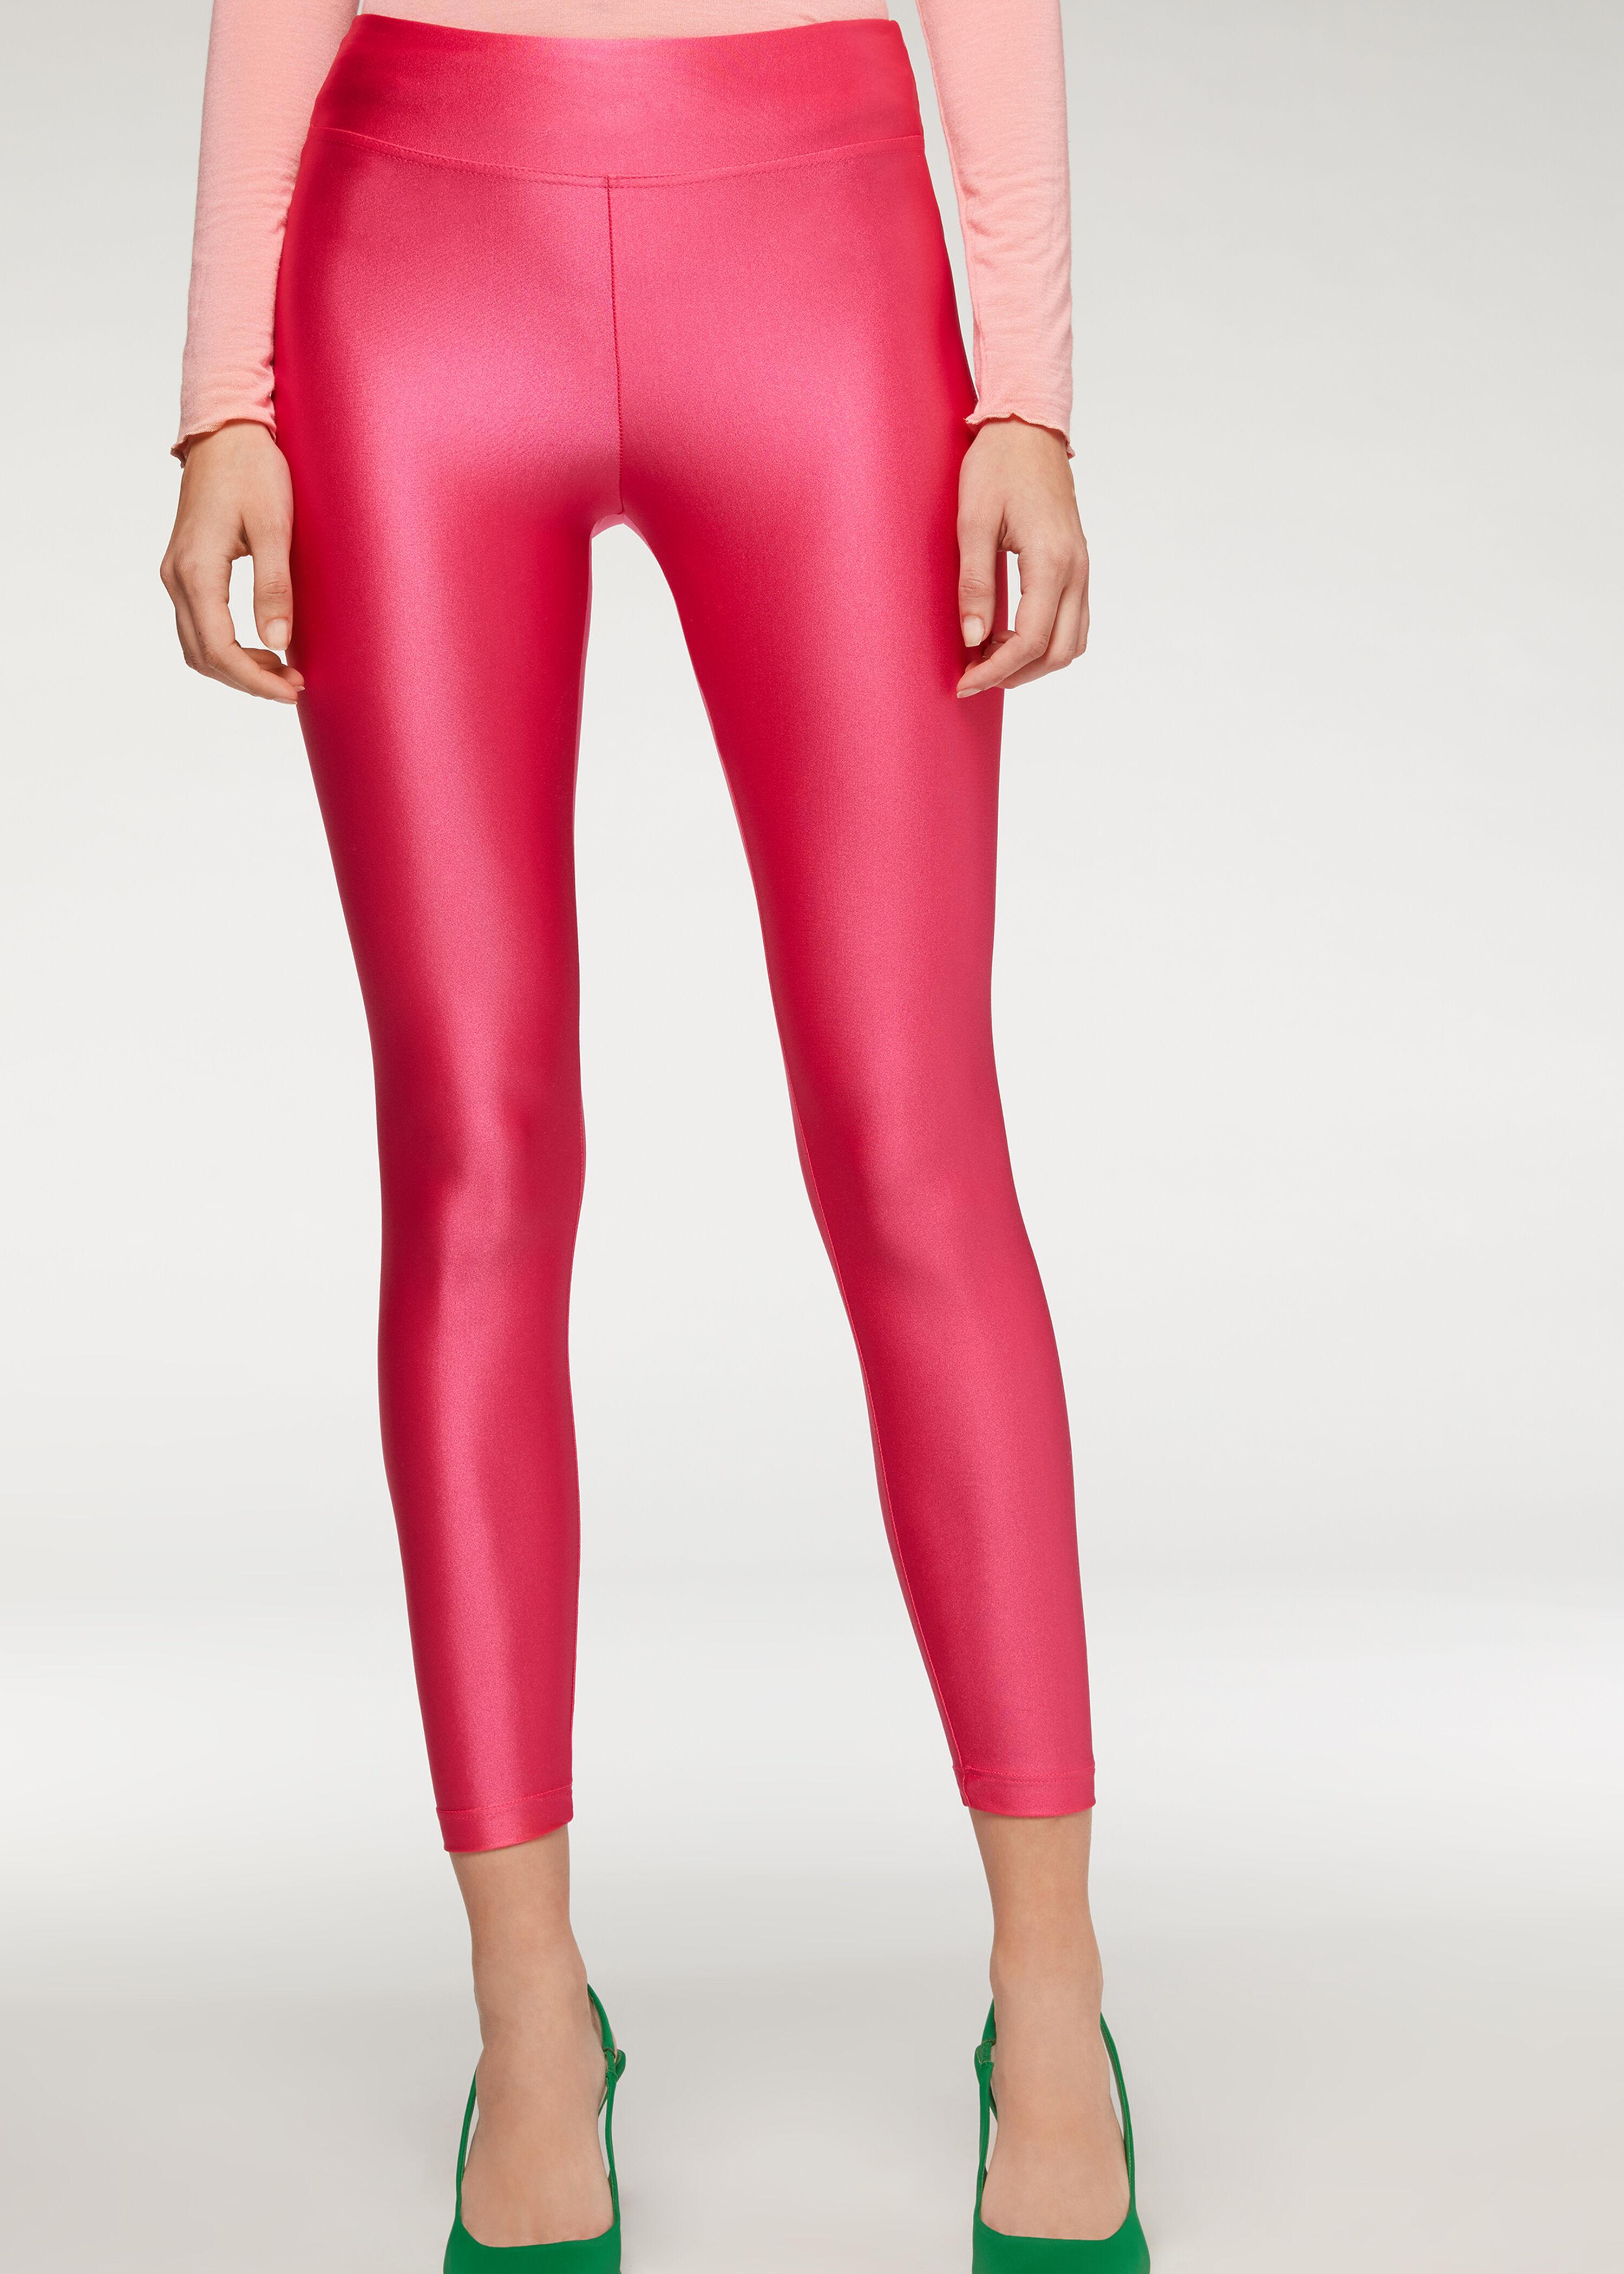 Calzedonia Super Shiny Leggings in Pink | Lyst UK